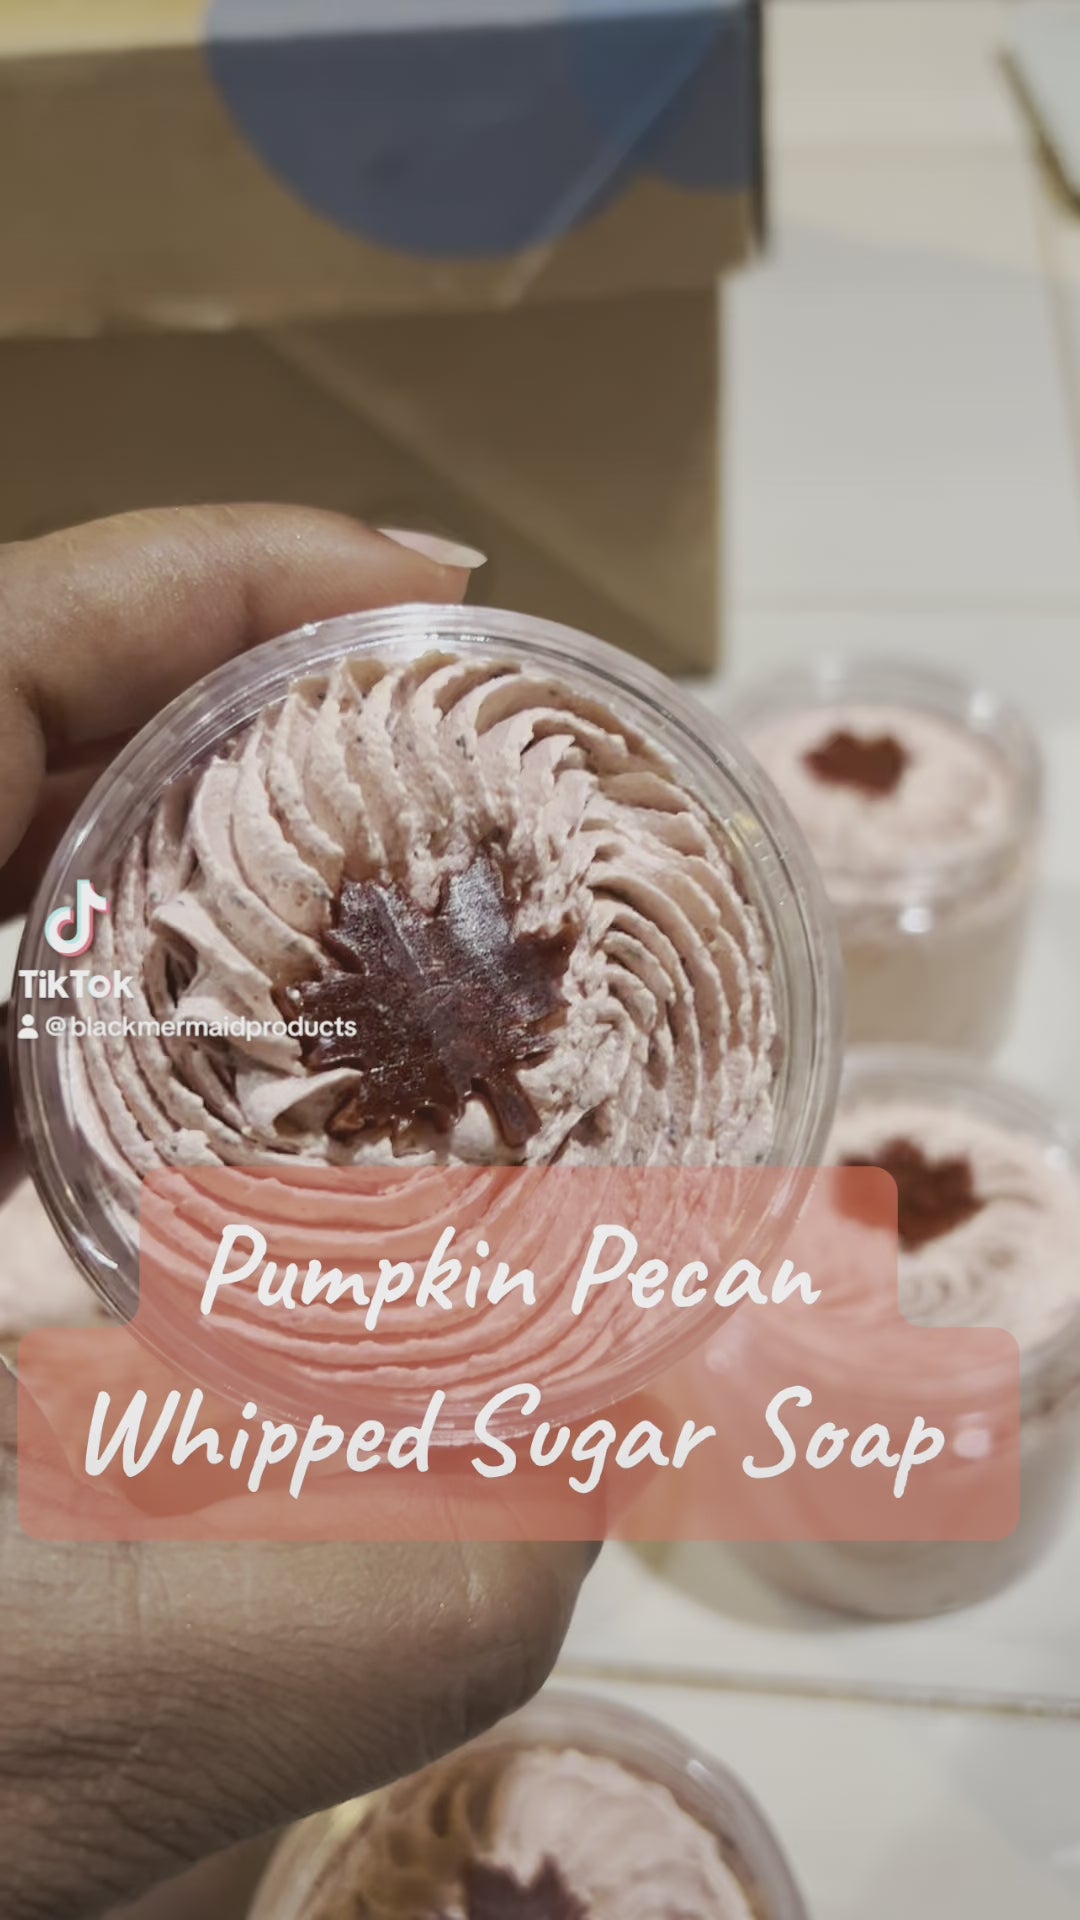 Pumpkin Pecan whipped sugar soap